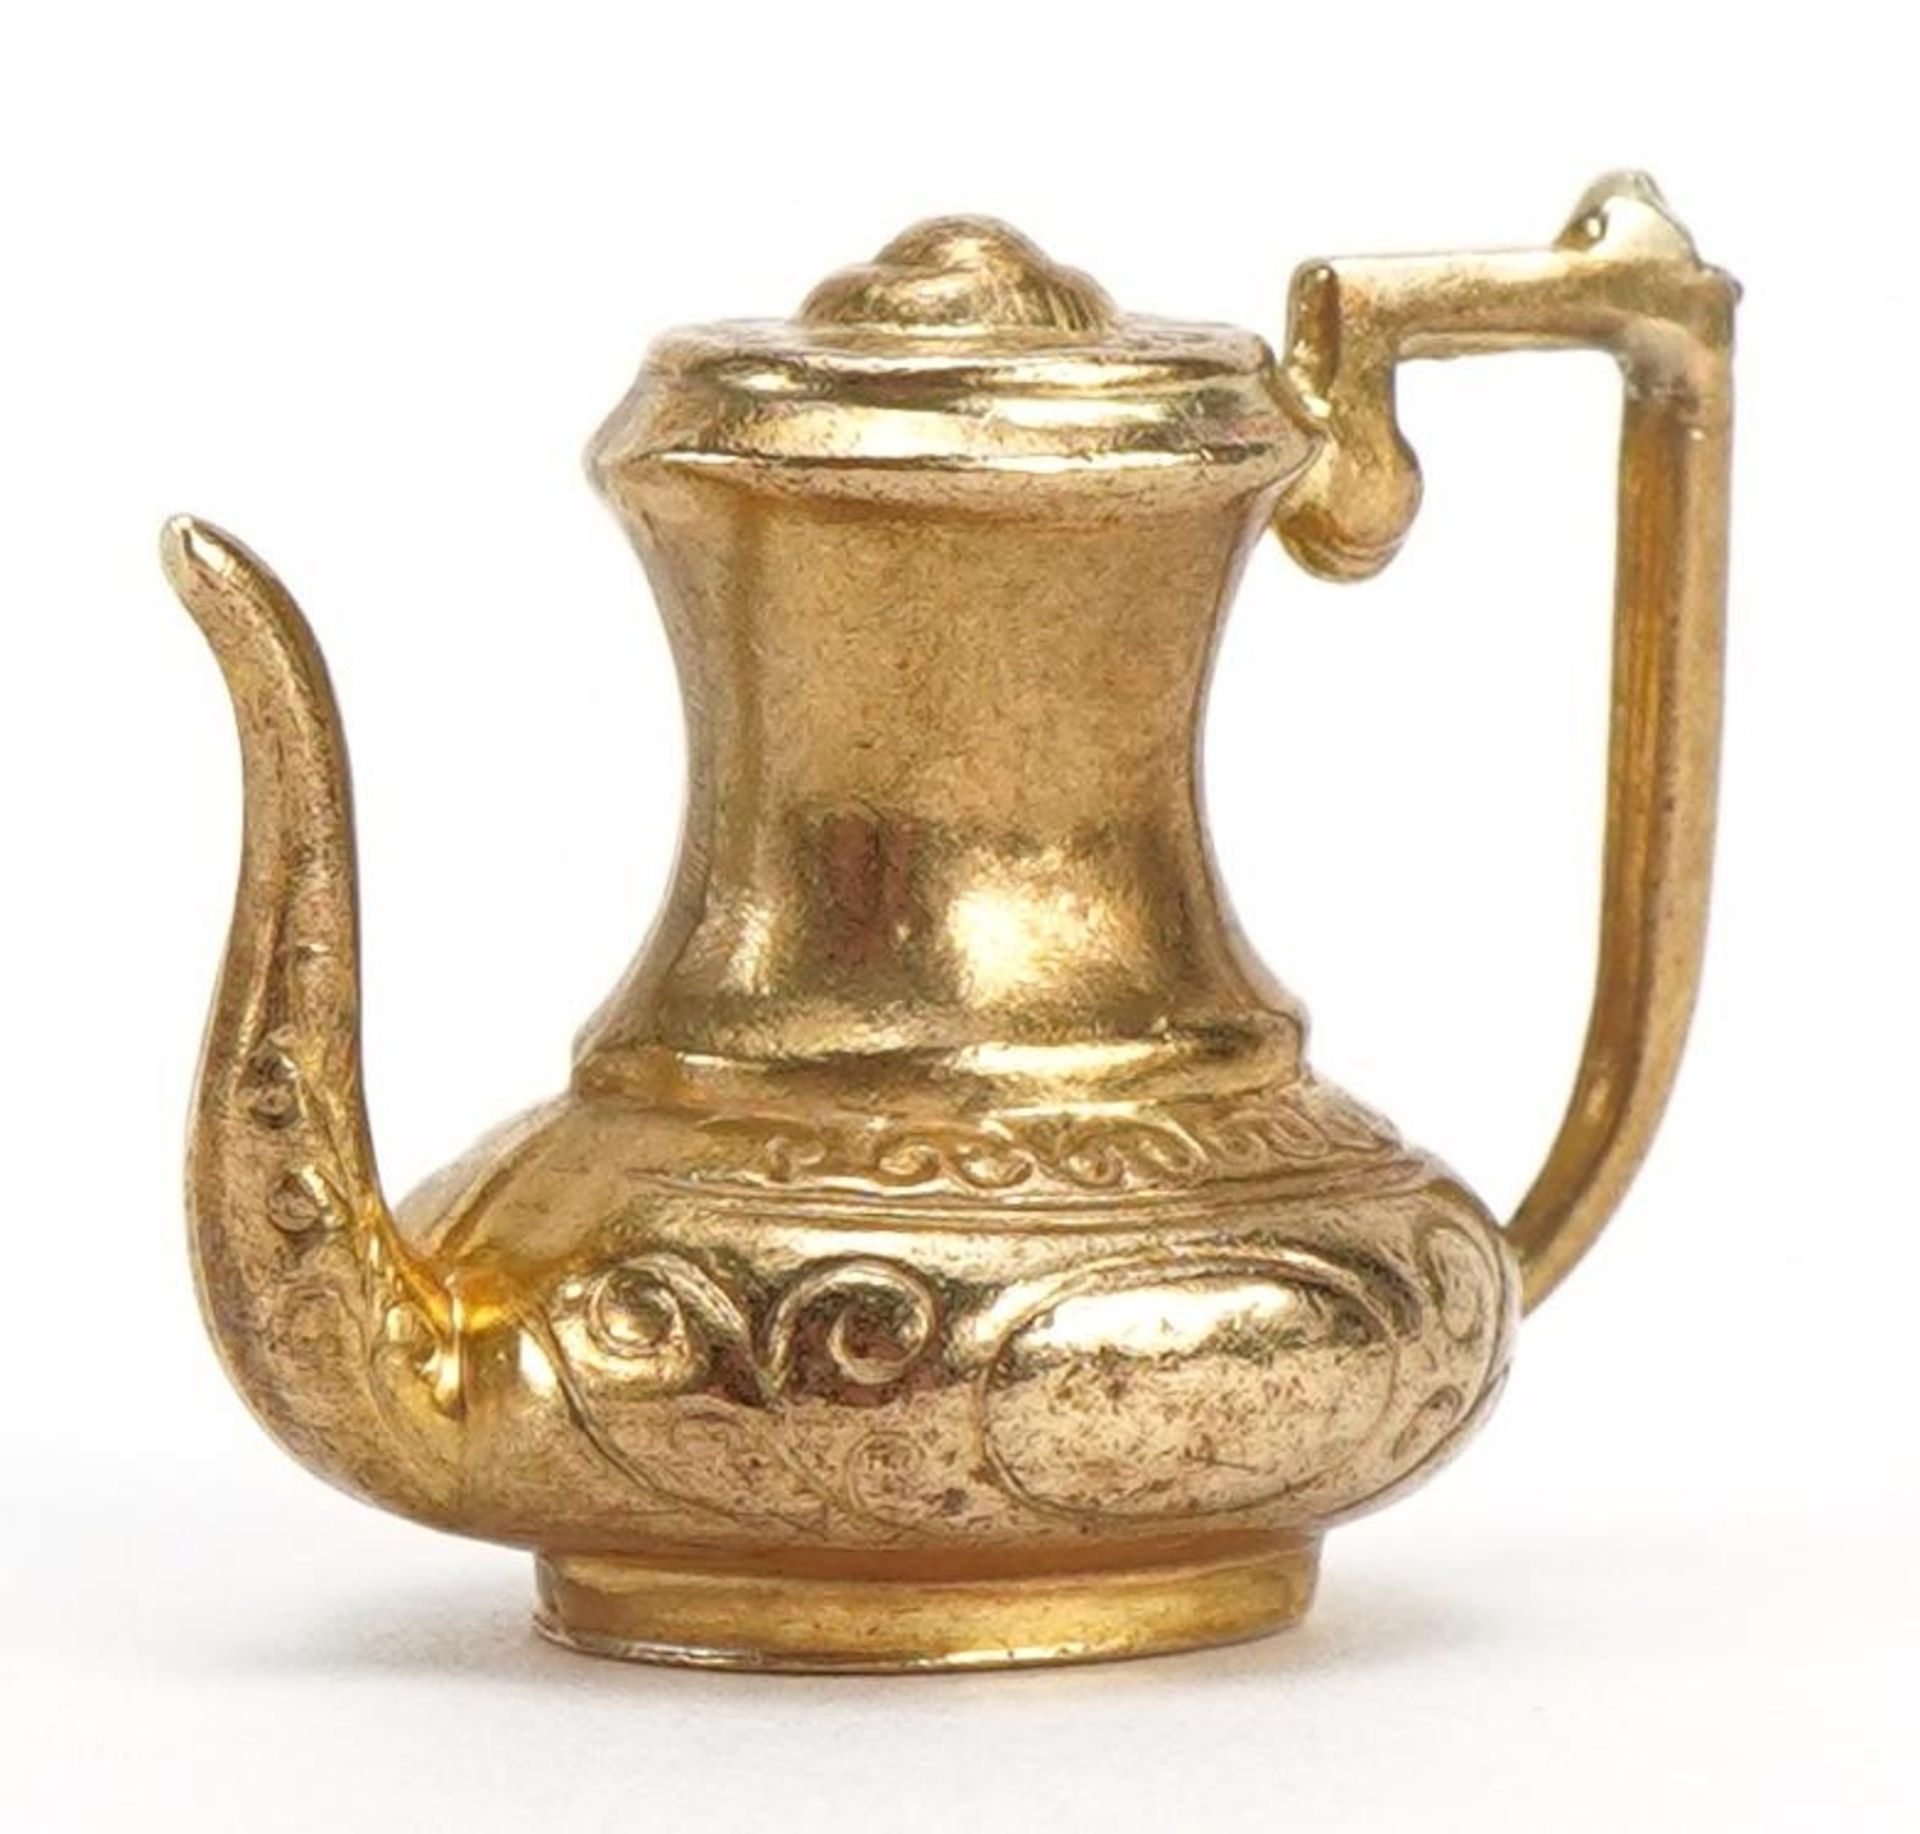 9ct gold teapot charm, 2.4cm wide, 2.2g